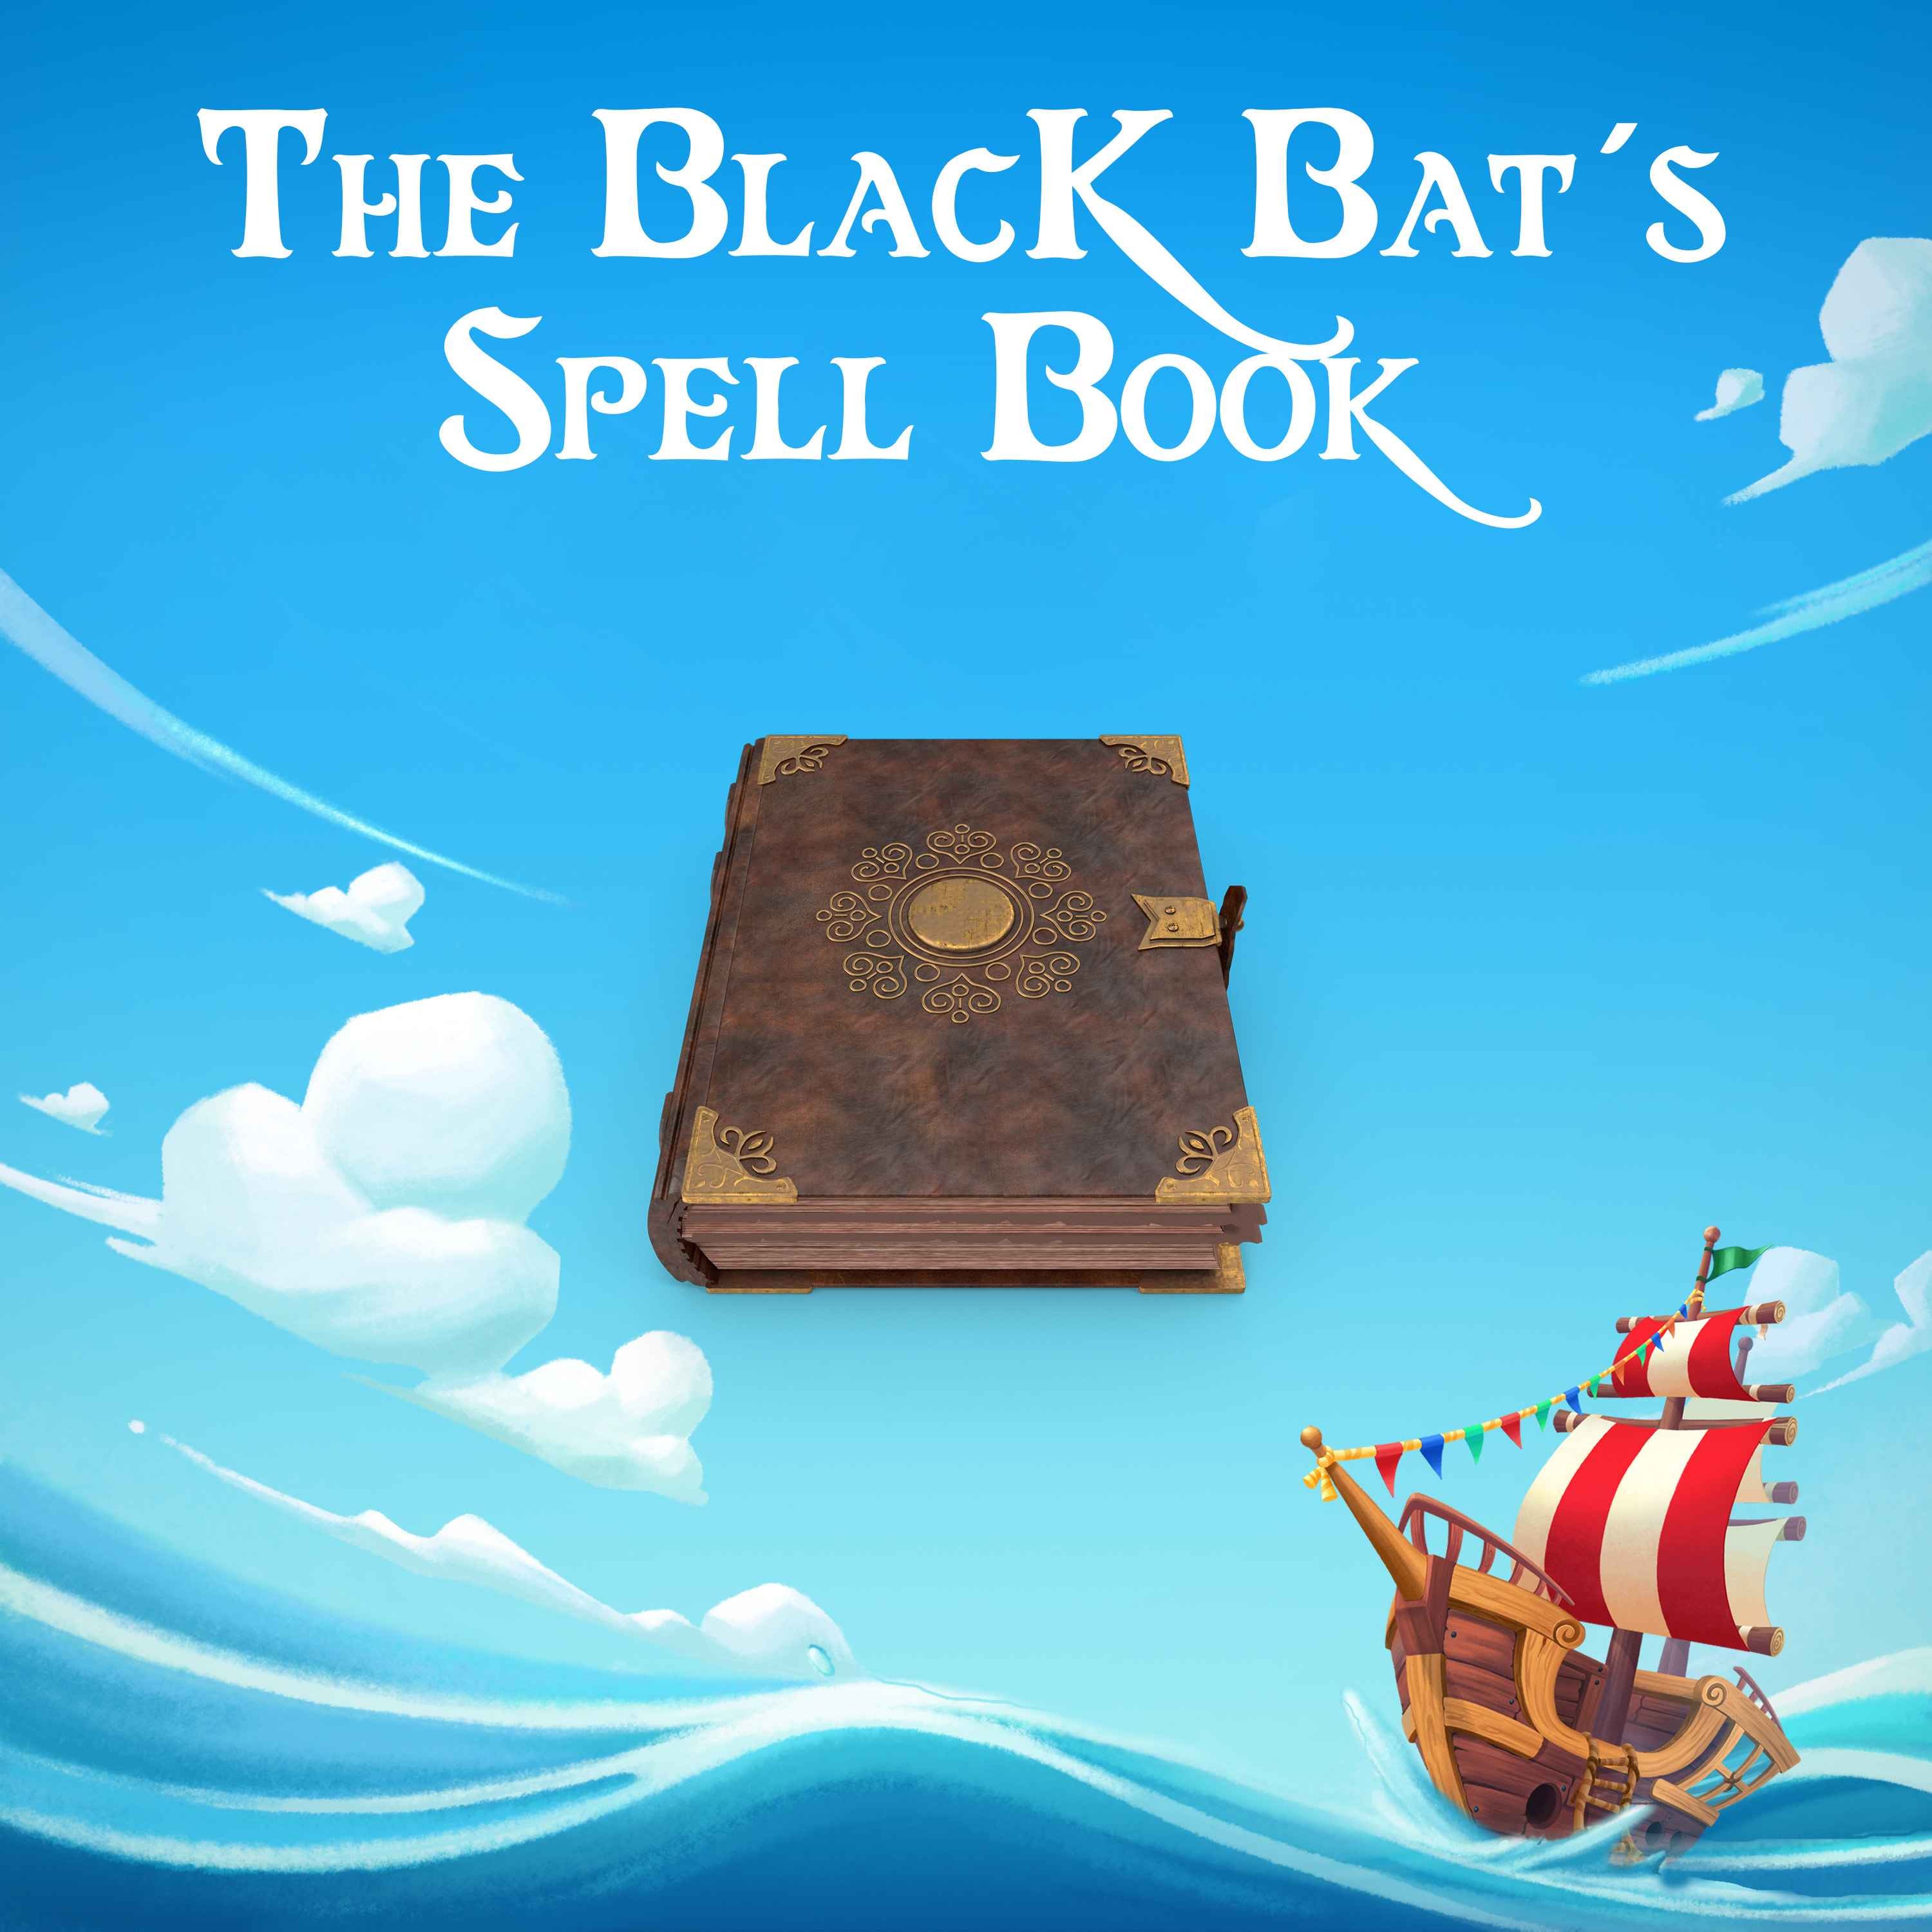 The Black Bat's Spell Book